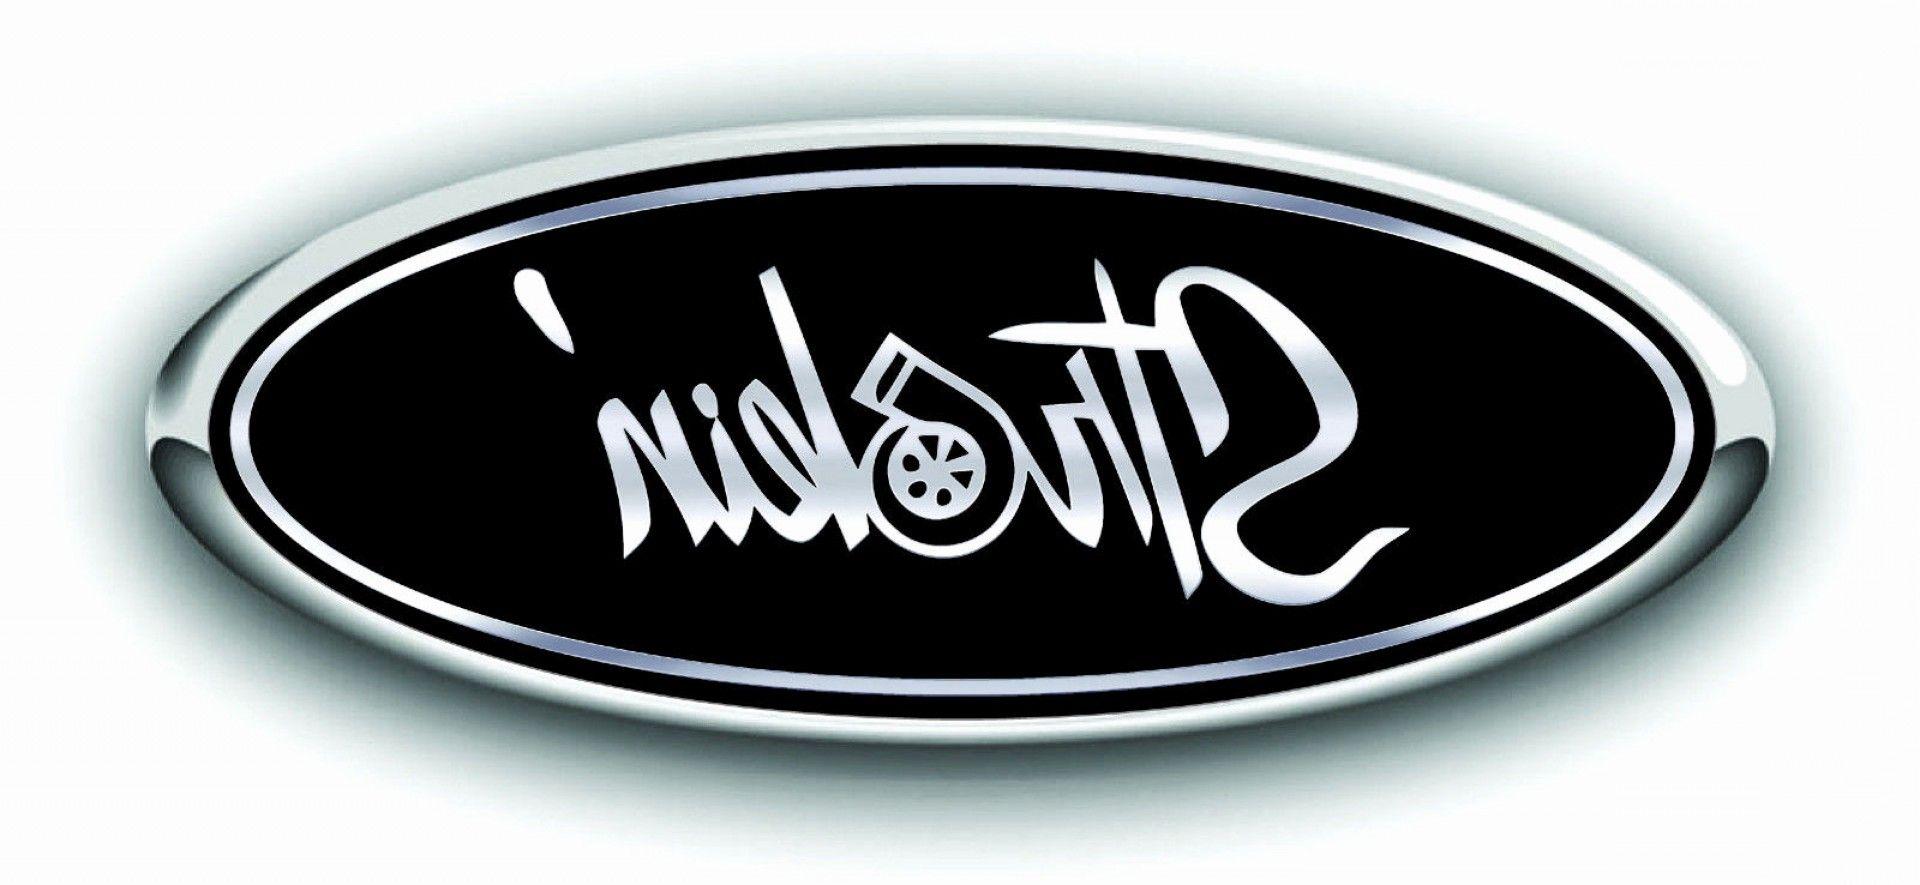 Small Ford Logo - Small Ford Logo Stickers Violassi Striping Company Ford Edge Logo ...